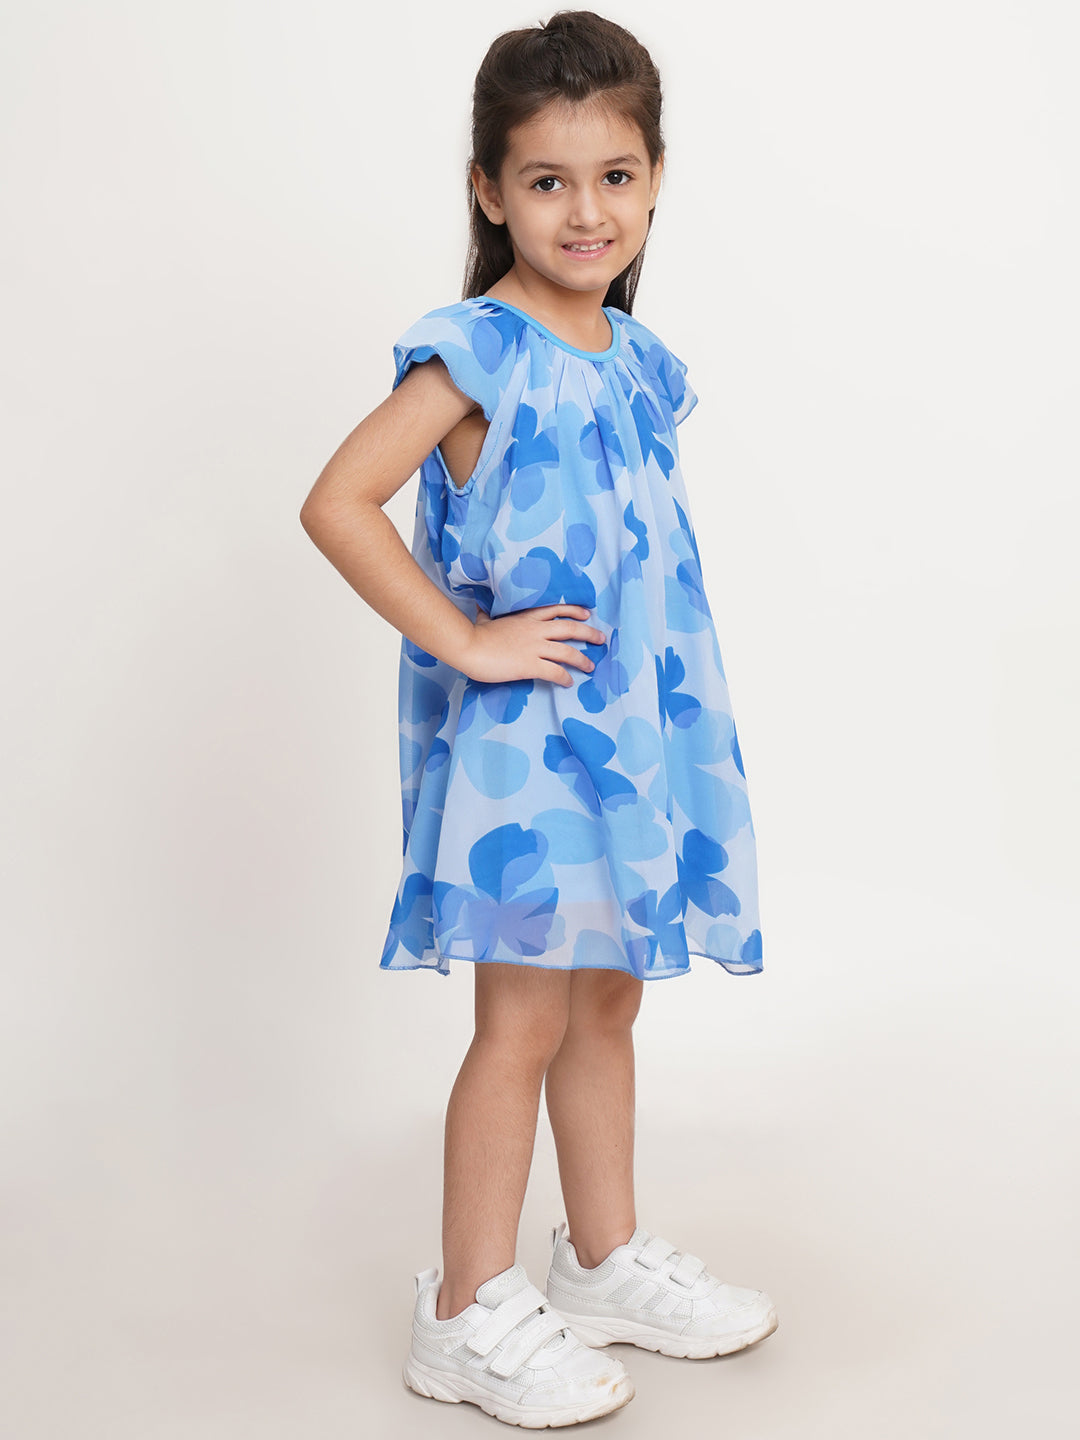 CREATIVE KID'S Girl Blue Floral Print A-Line Dress